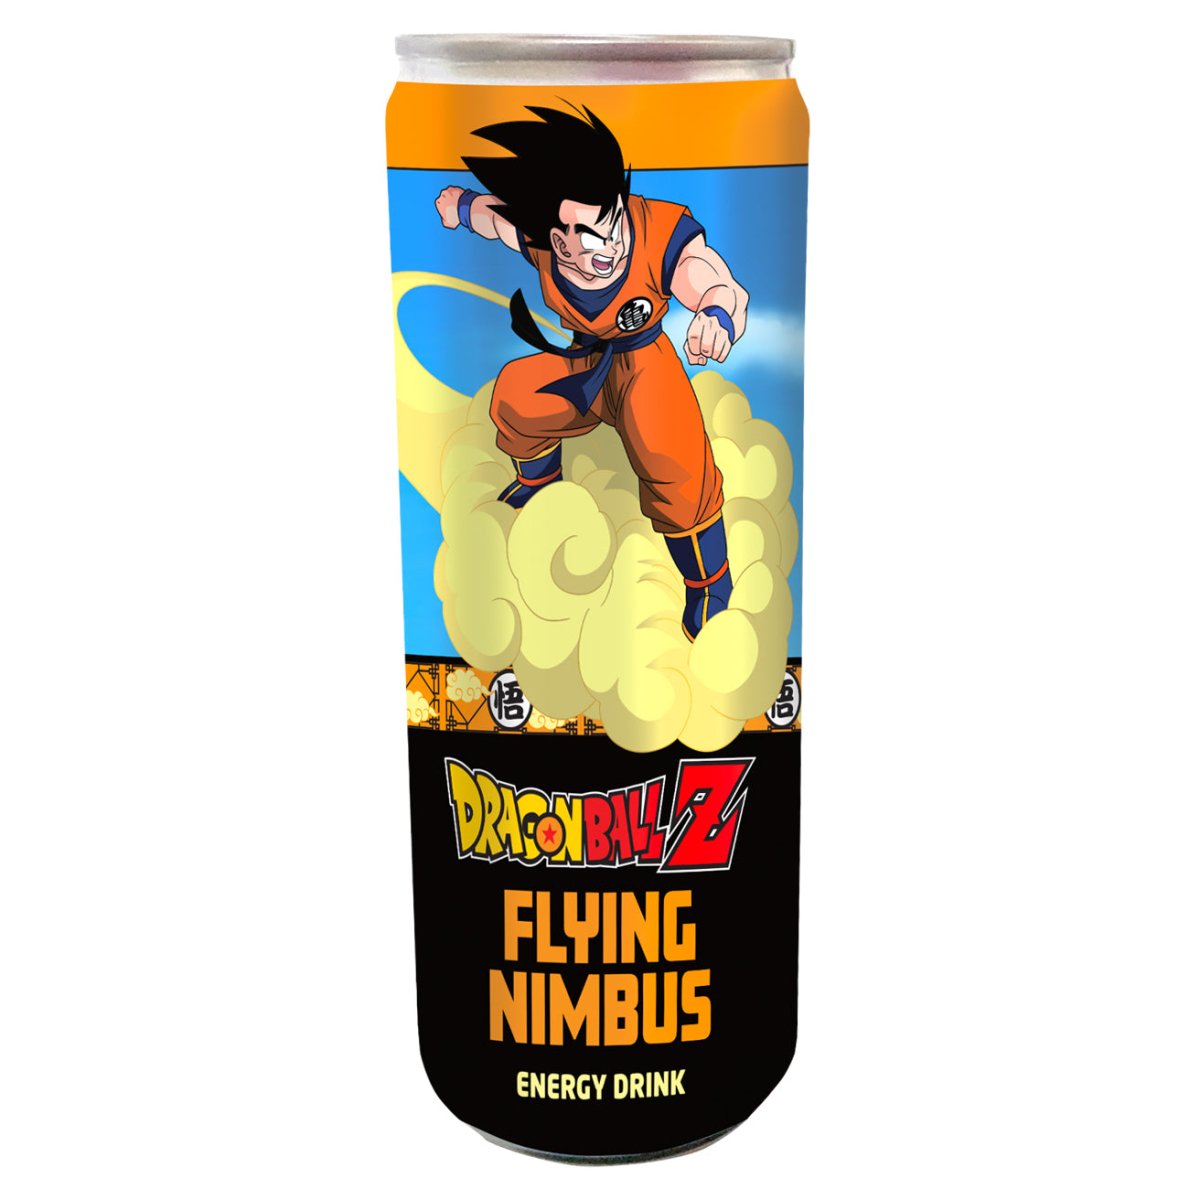 Boston America Dragonball Z Flying Nimbus Energy Drink 355ml - Candy Mail UK